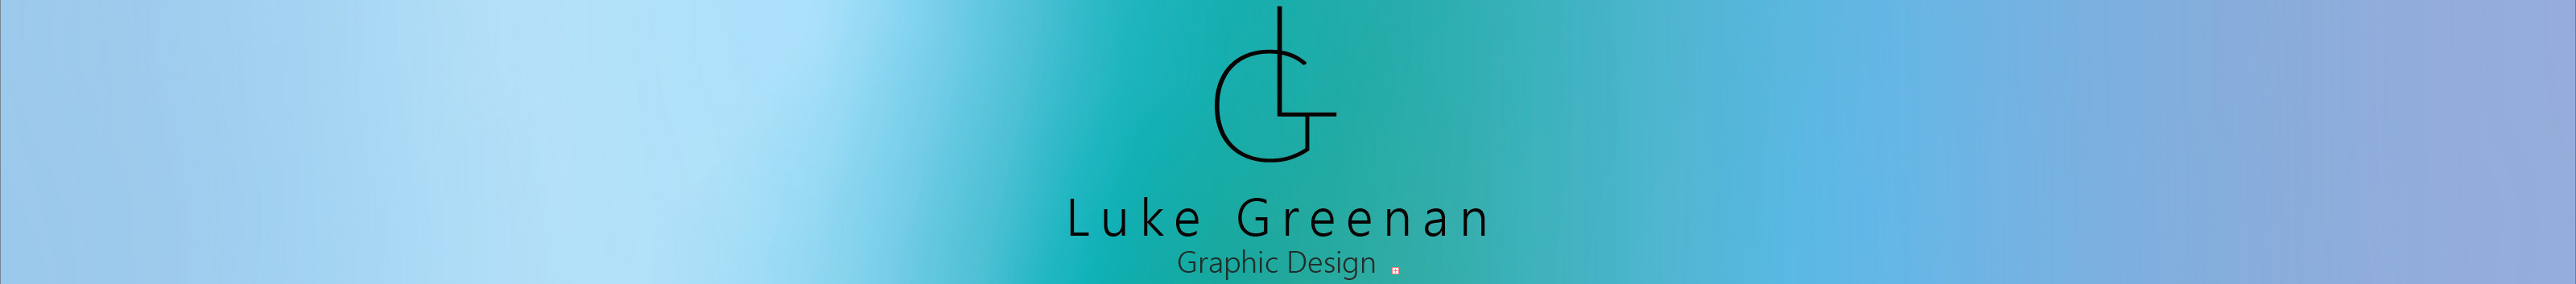 Luke Greenan's profile banner